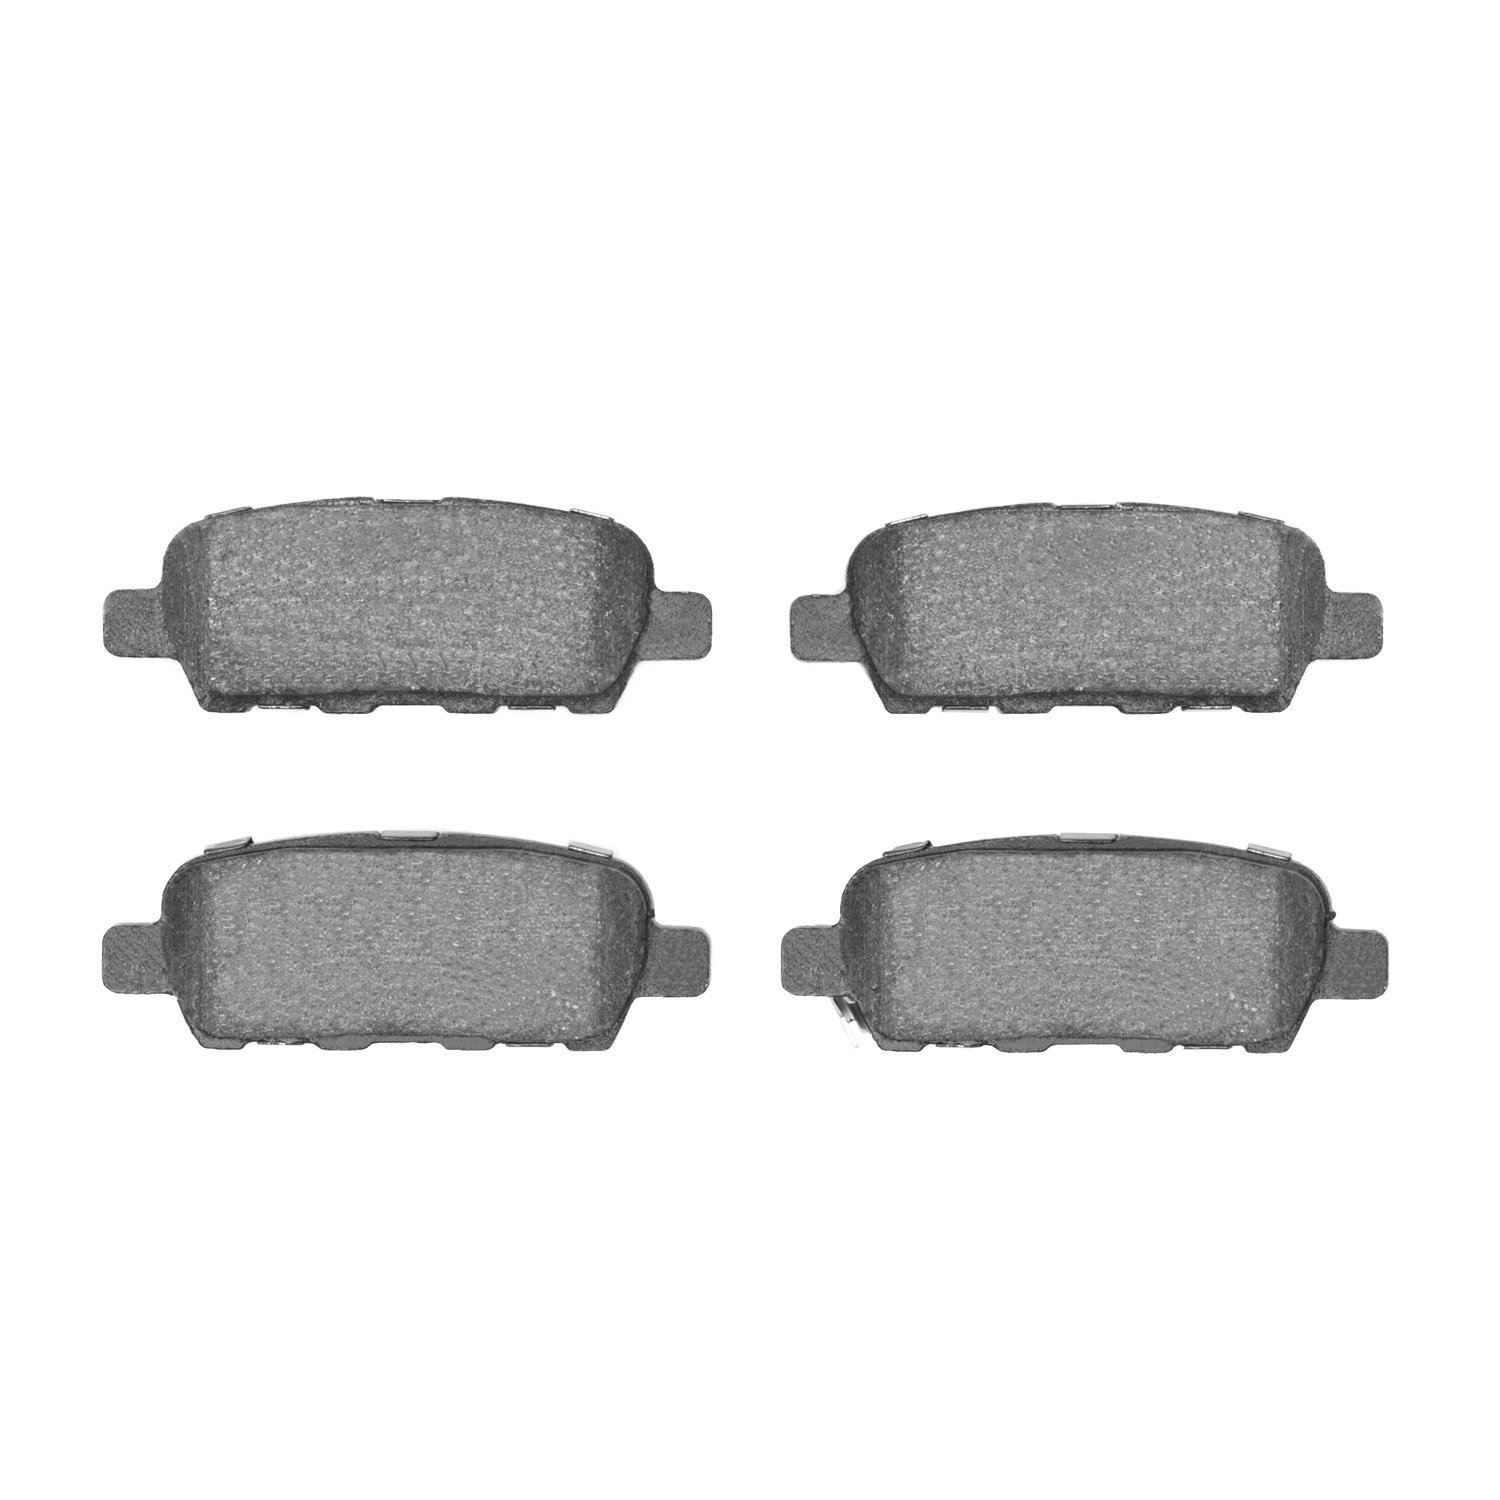 1311-0905-00 3000-Series Semi-Metallic Brake Pads, Fits Select Multiple Makes/Models, Position: Rear